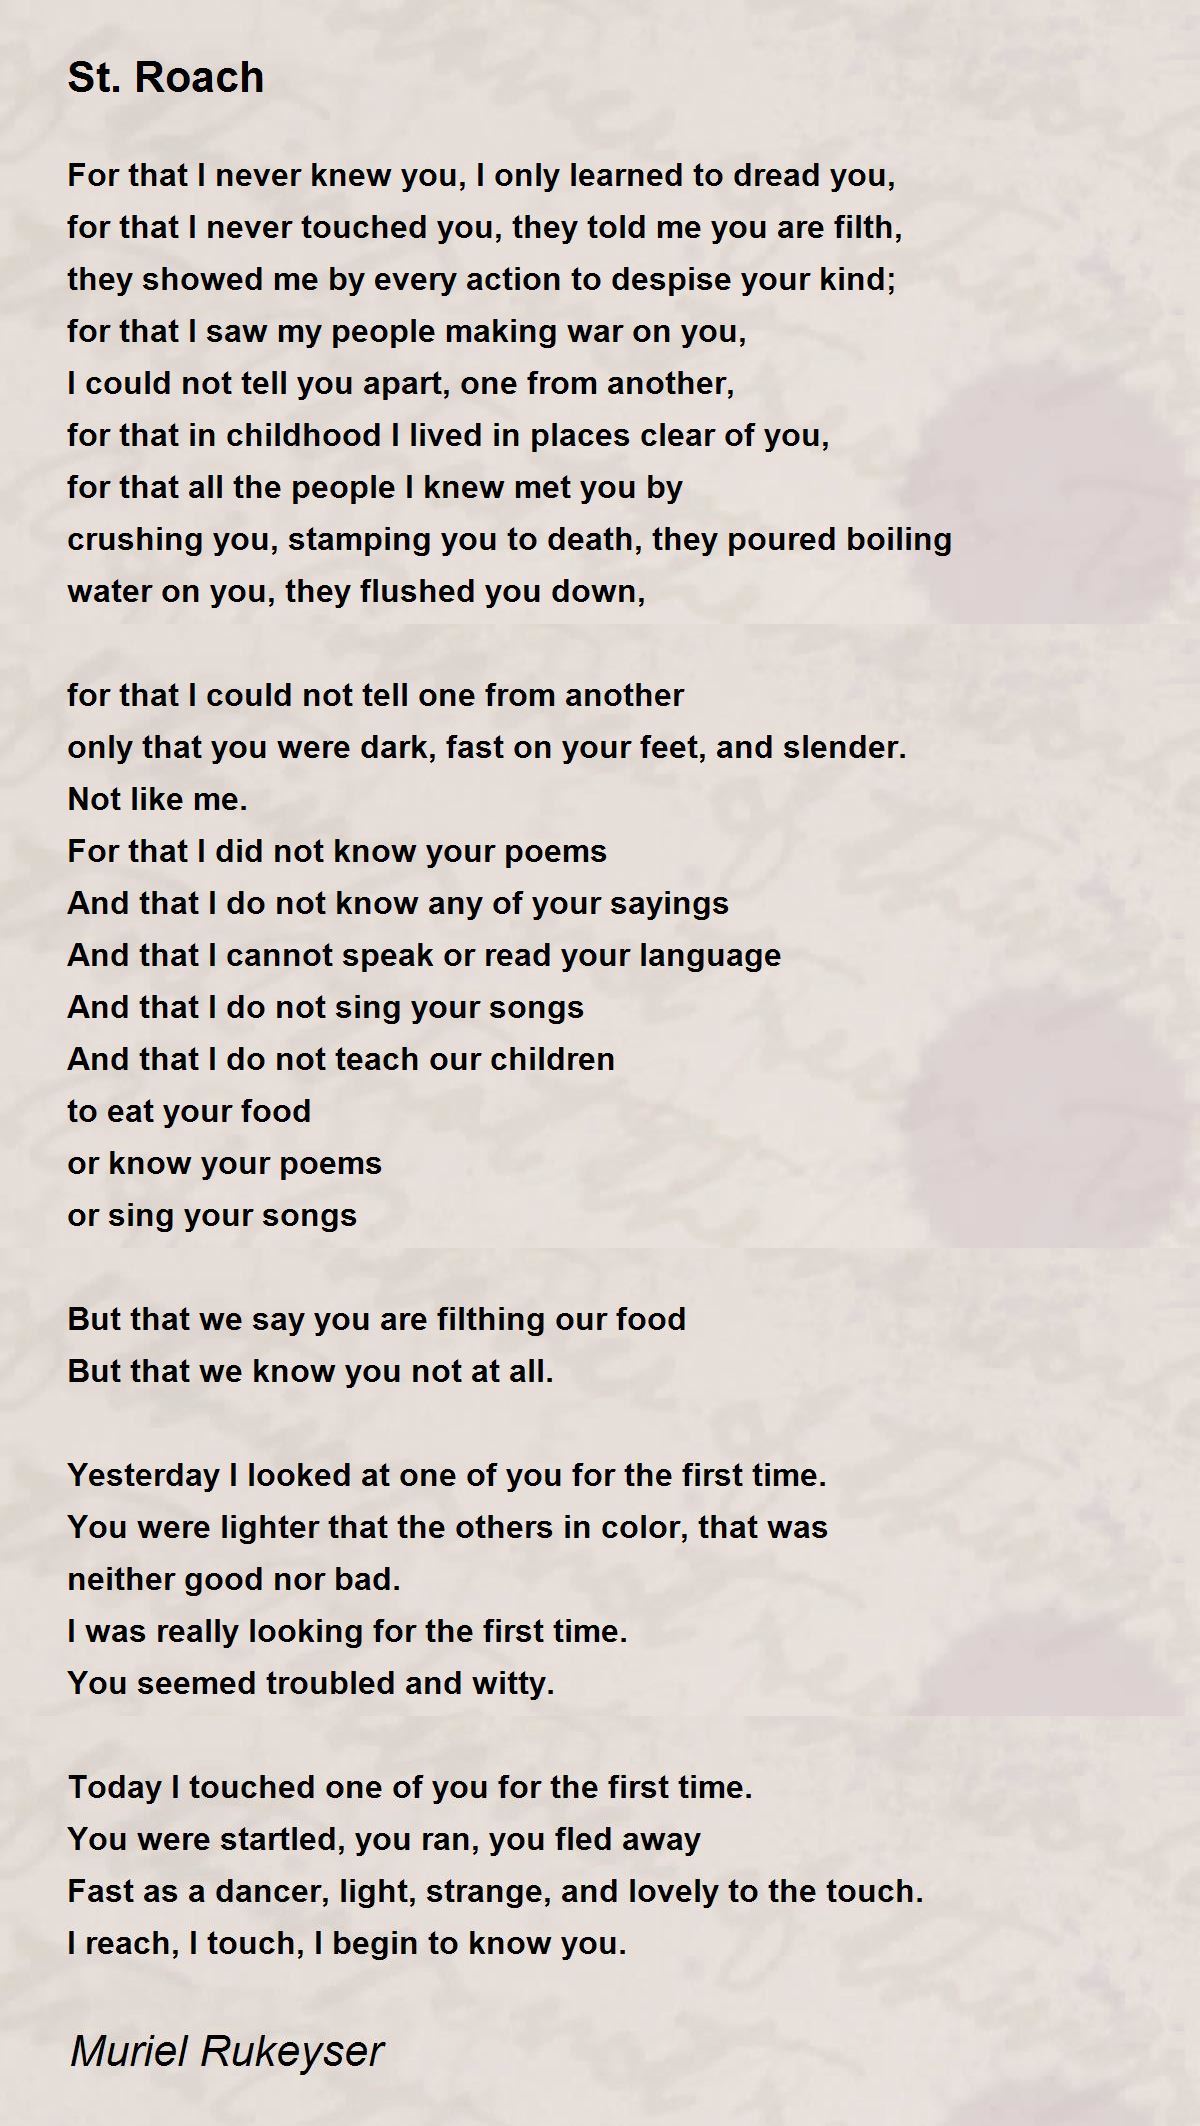 St. Roach - St. Roach Poem by Muriel Rukeyser